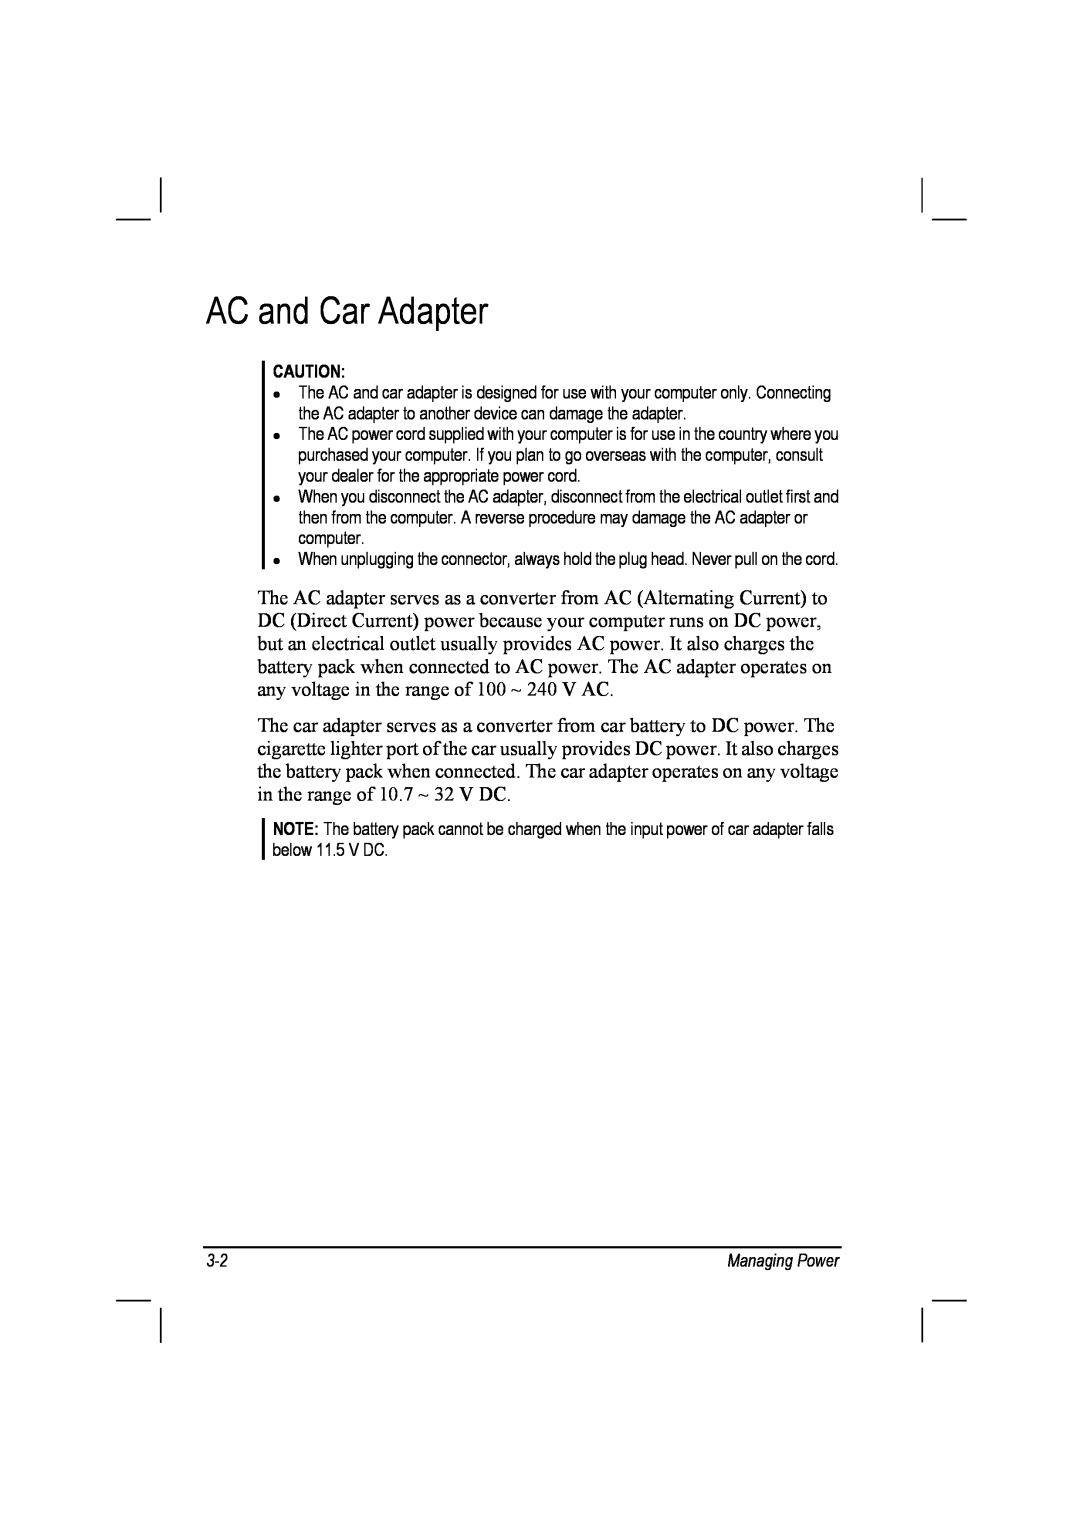 TAG 10 manual AC and Car Adapter, Managing Power 